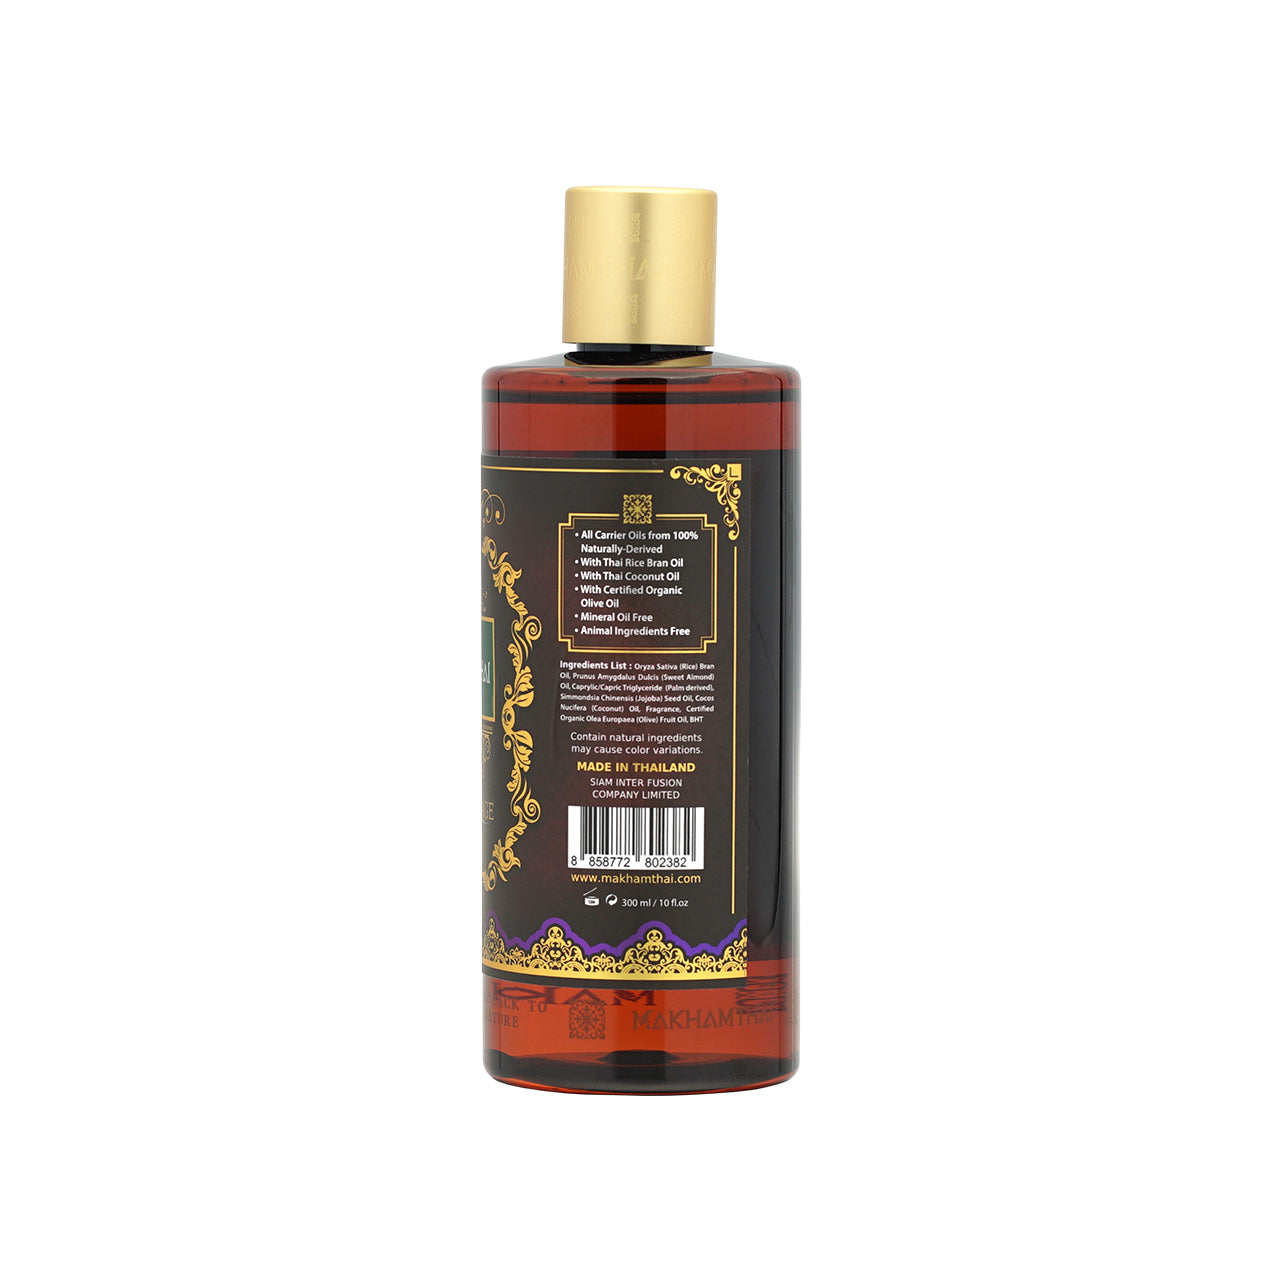 Makhamthai Bath & Massage Body Oil - Lavender 300ml | Sasa Global eShop